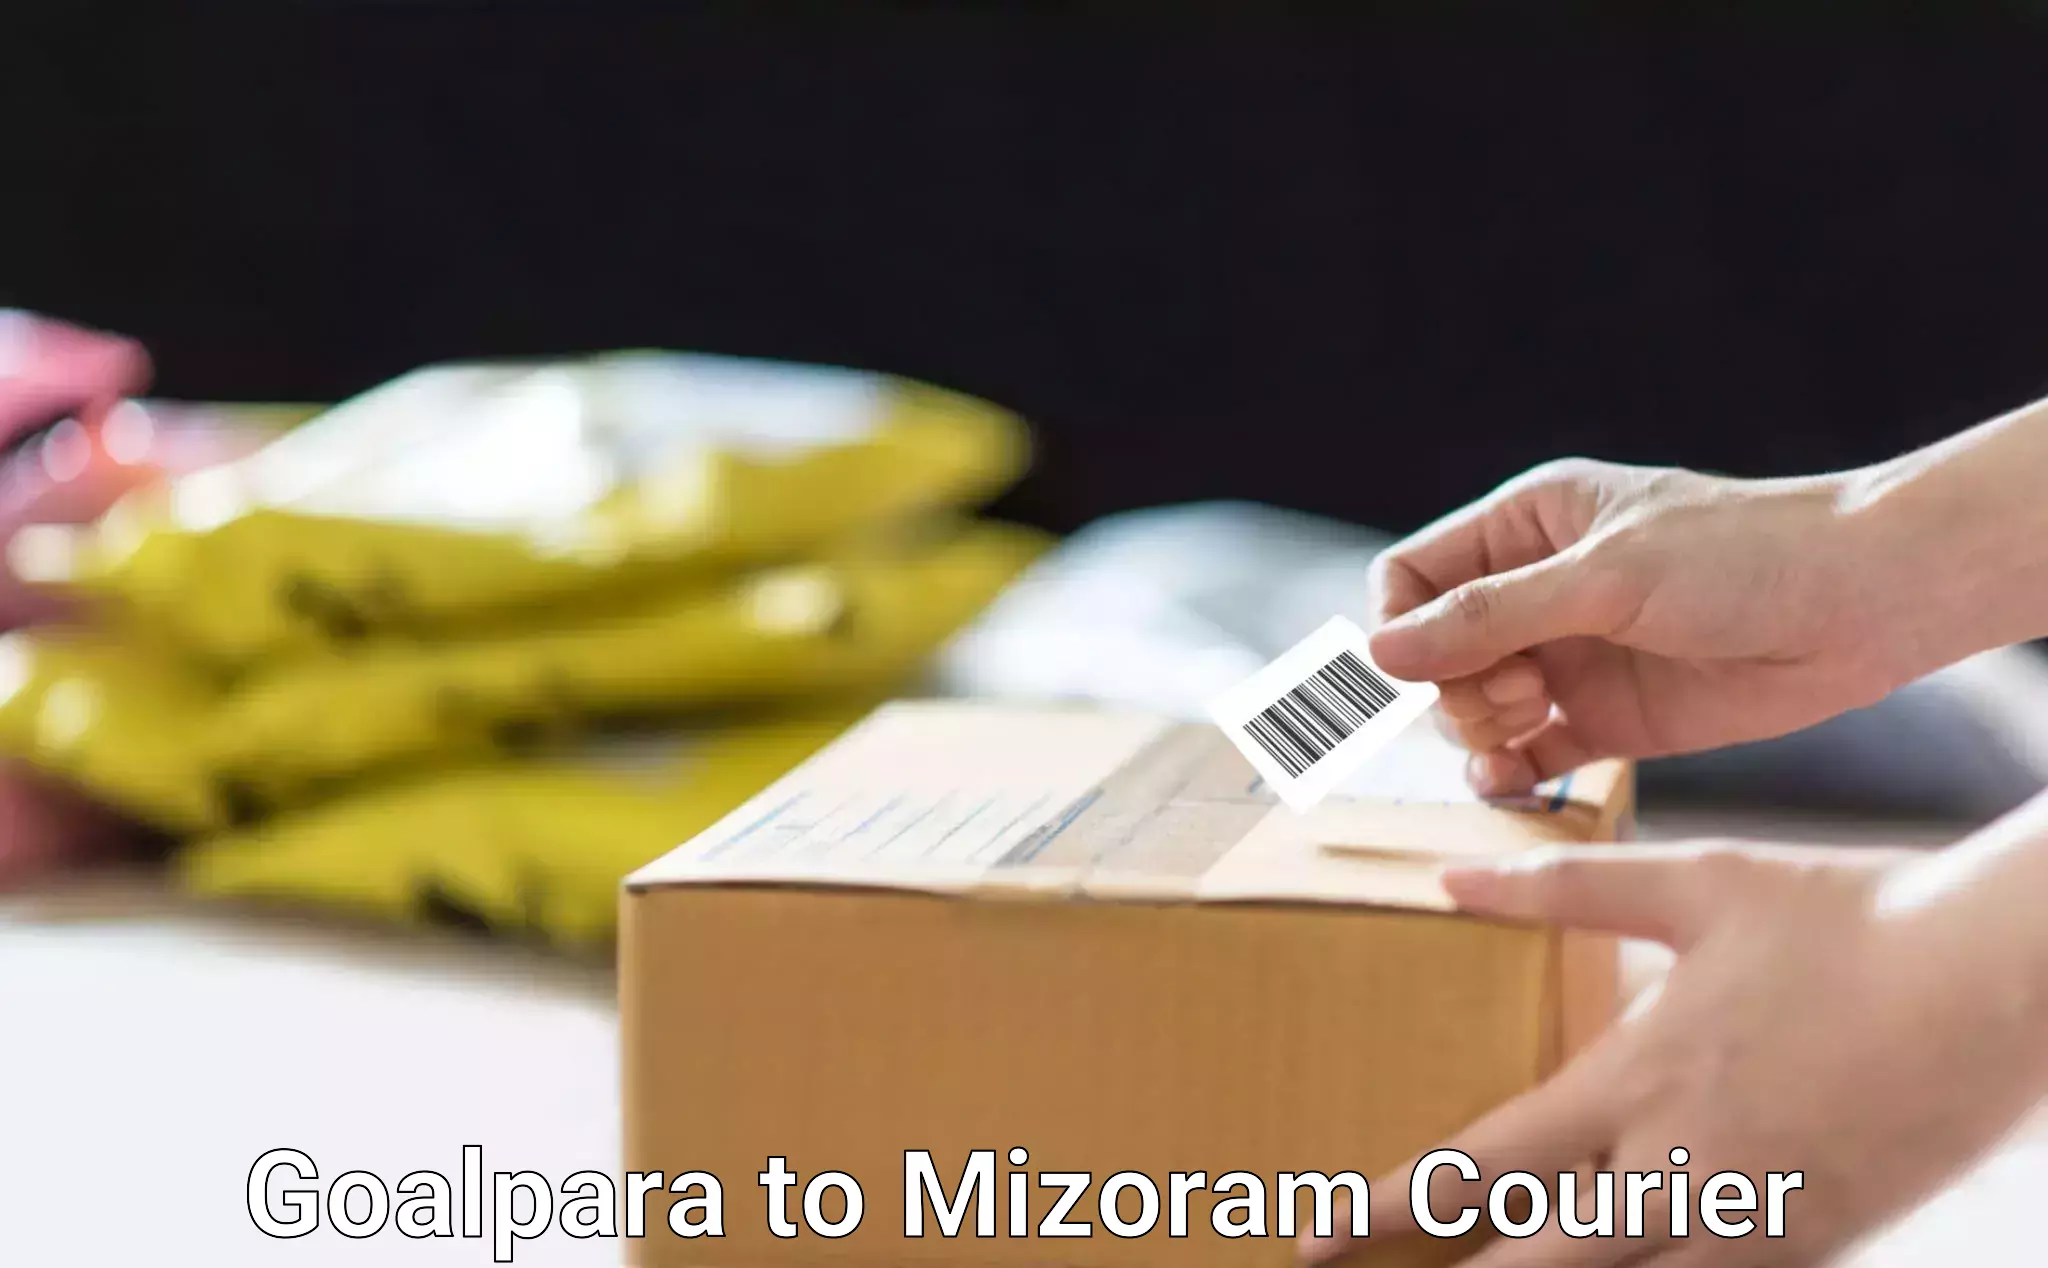 Nationwide delivery network Goalpara to Mizoram